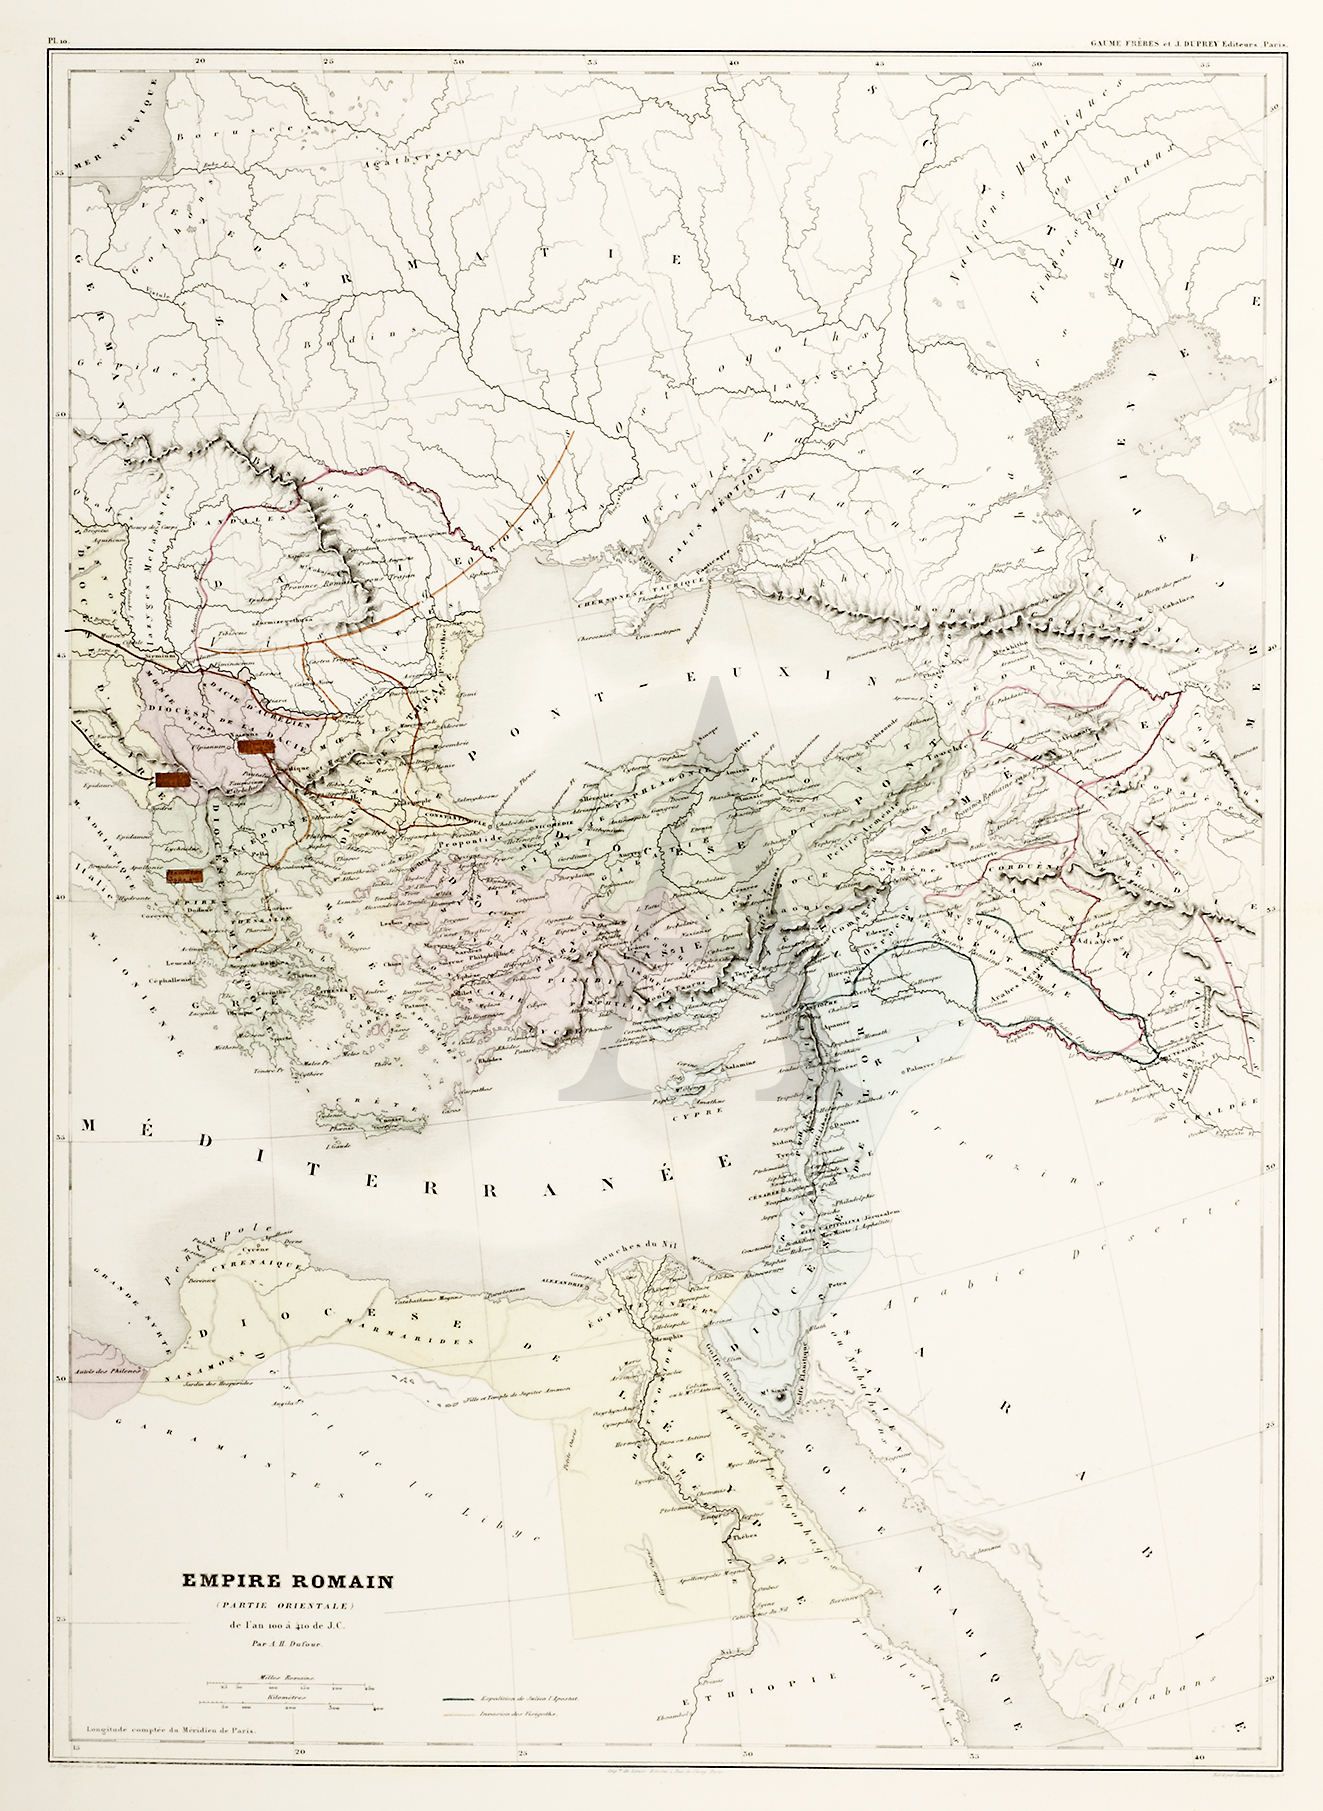 Empire Romain (Partie Orientale) - Antique Print from 1864